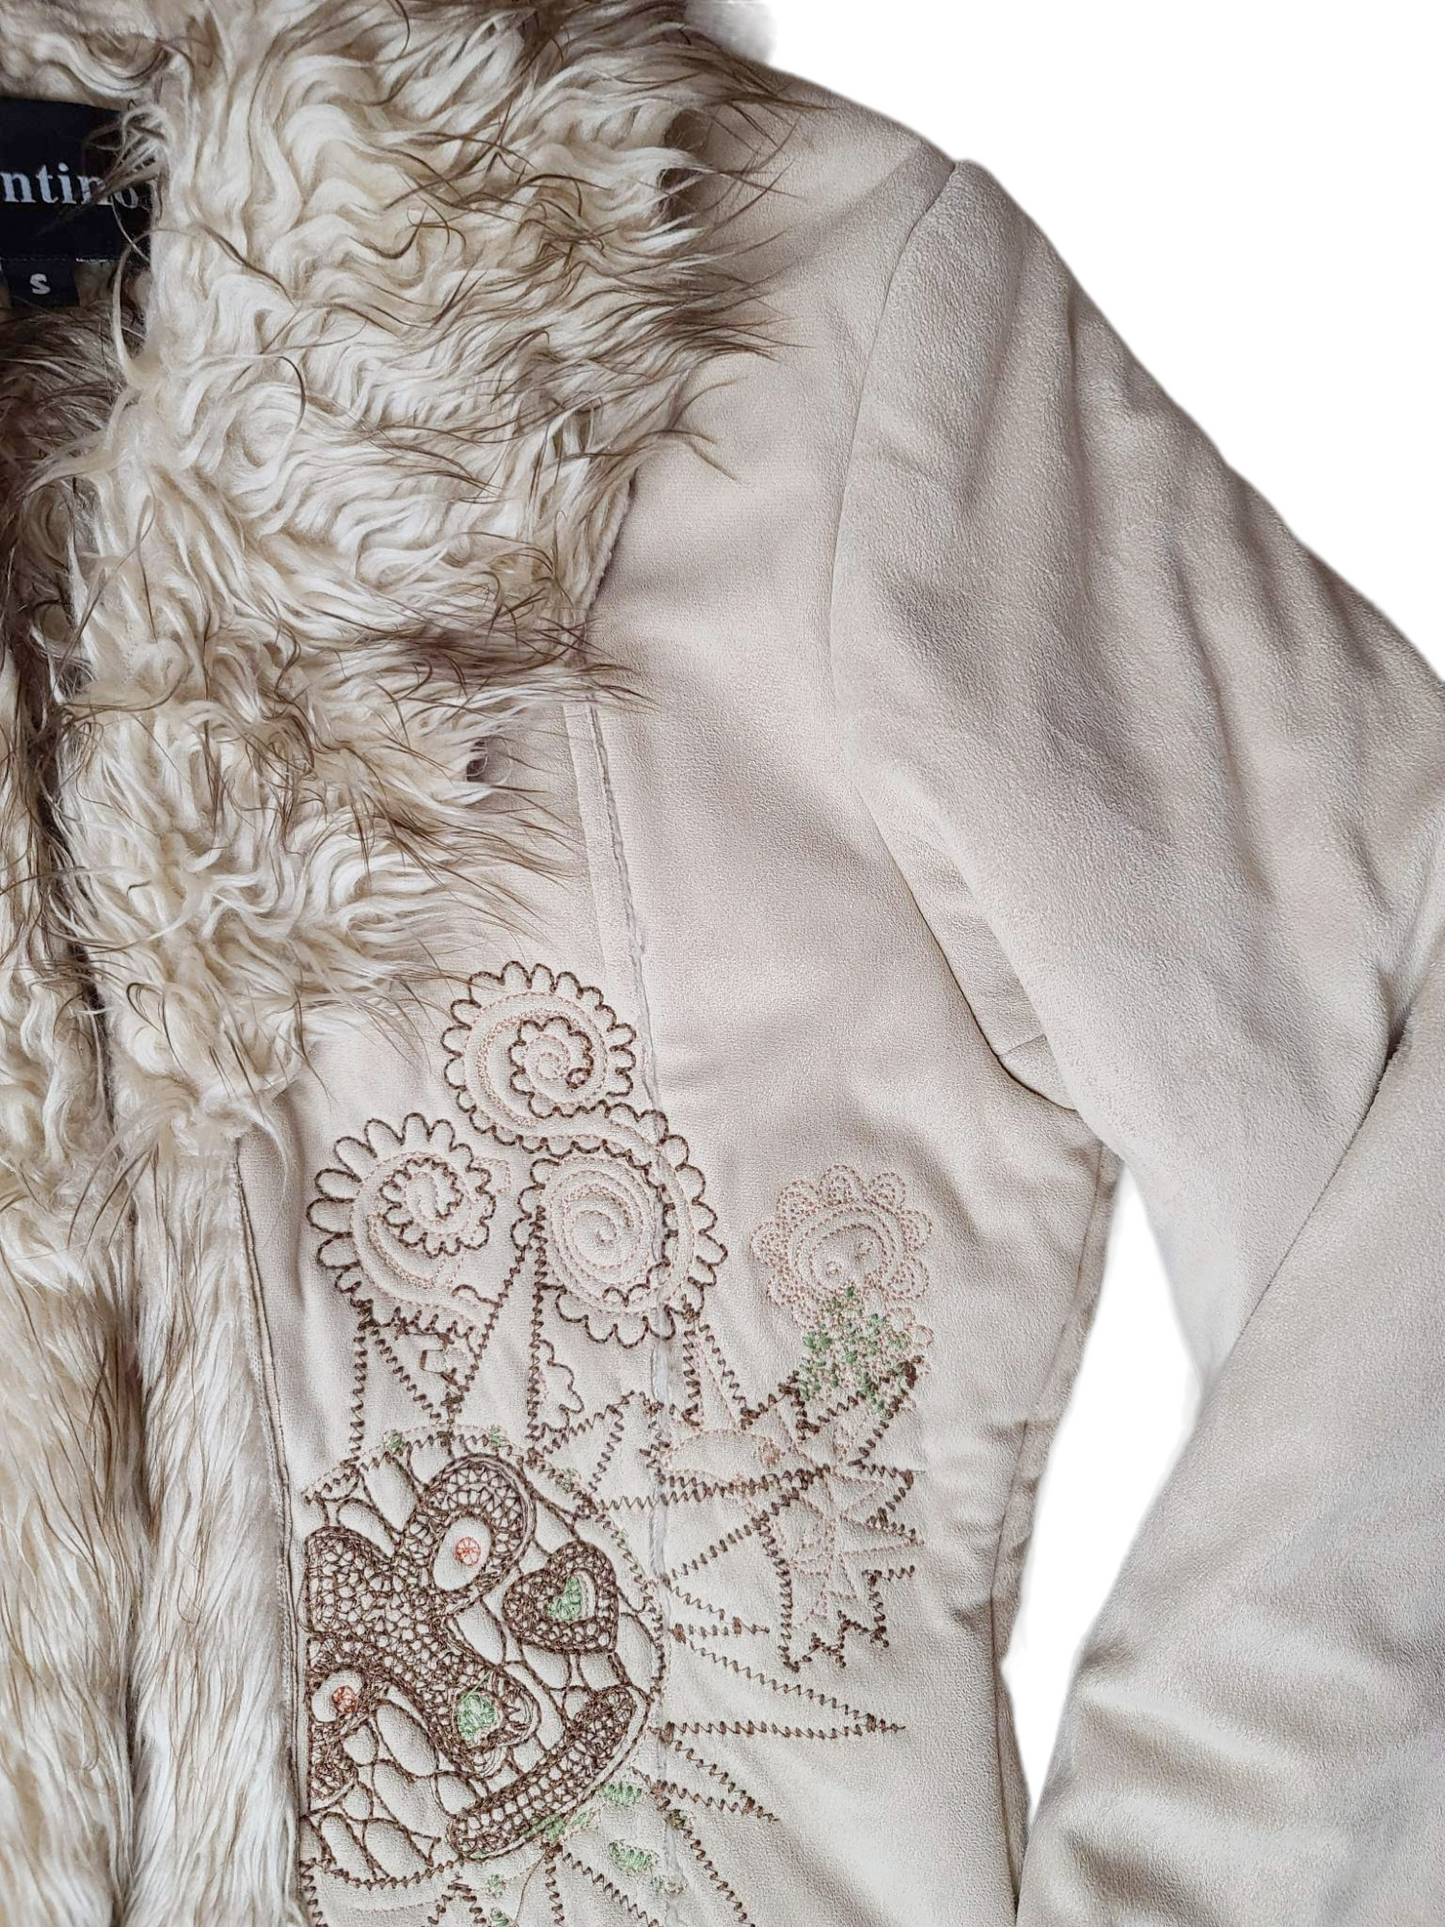 Long manteau afghan fairycore